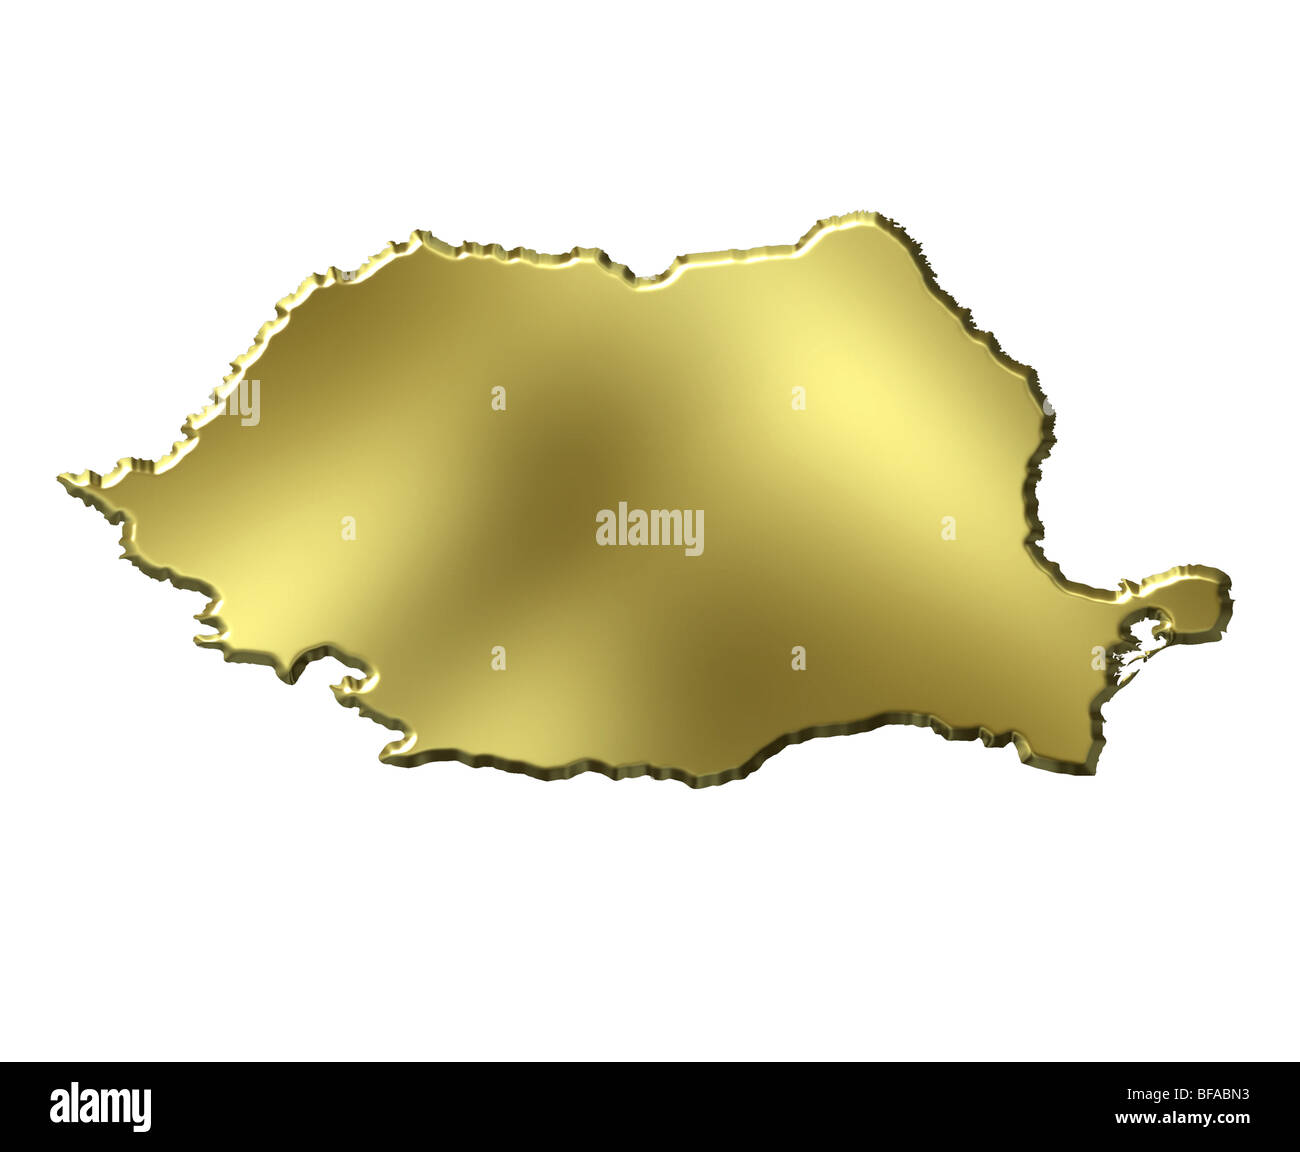 Romania 3d golden map Stock Photo